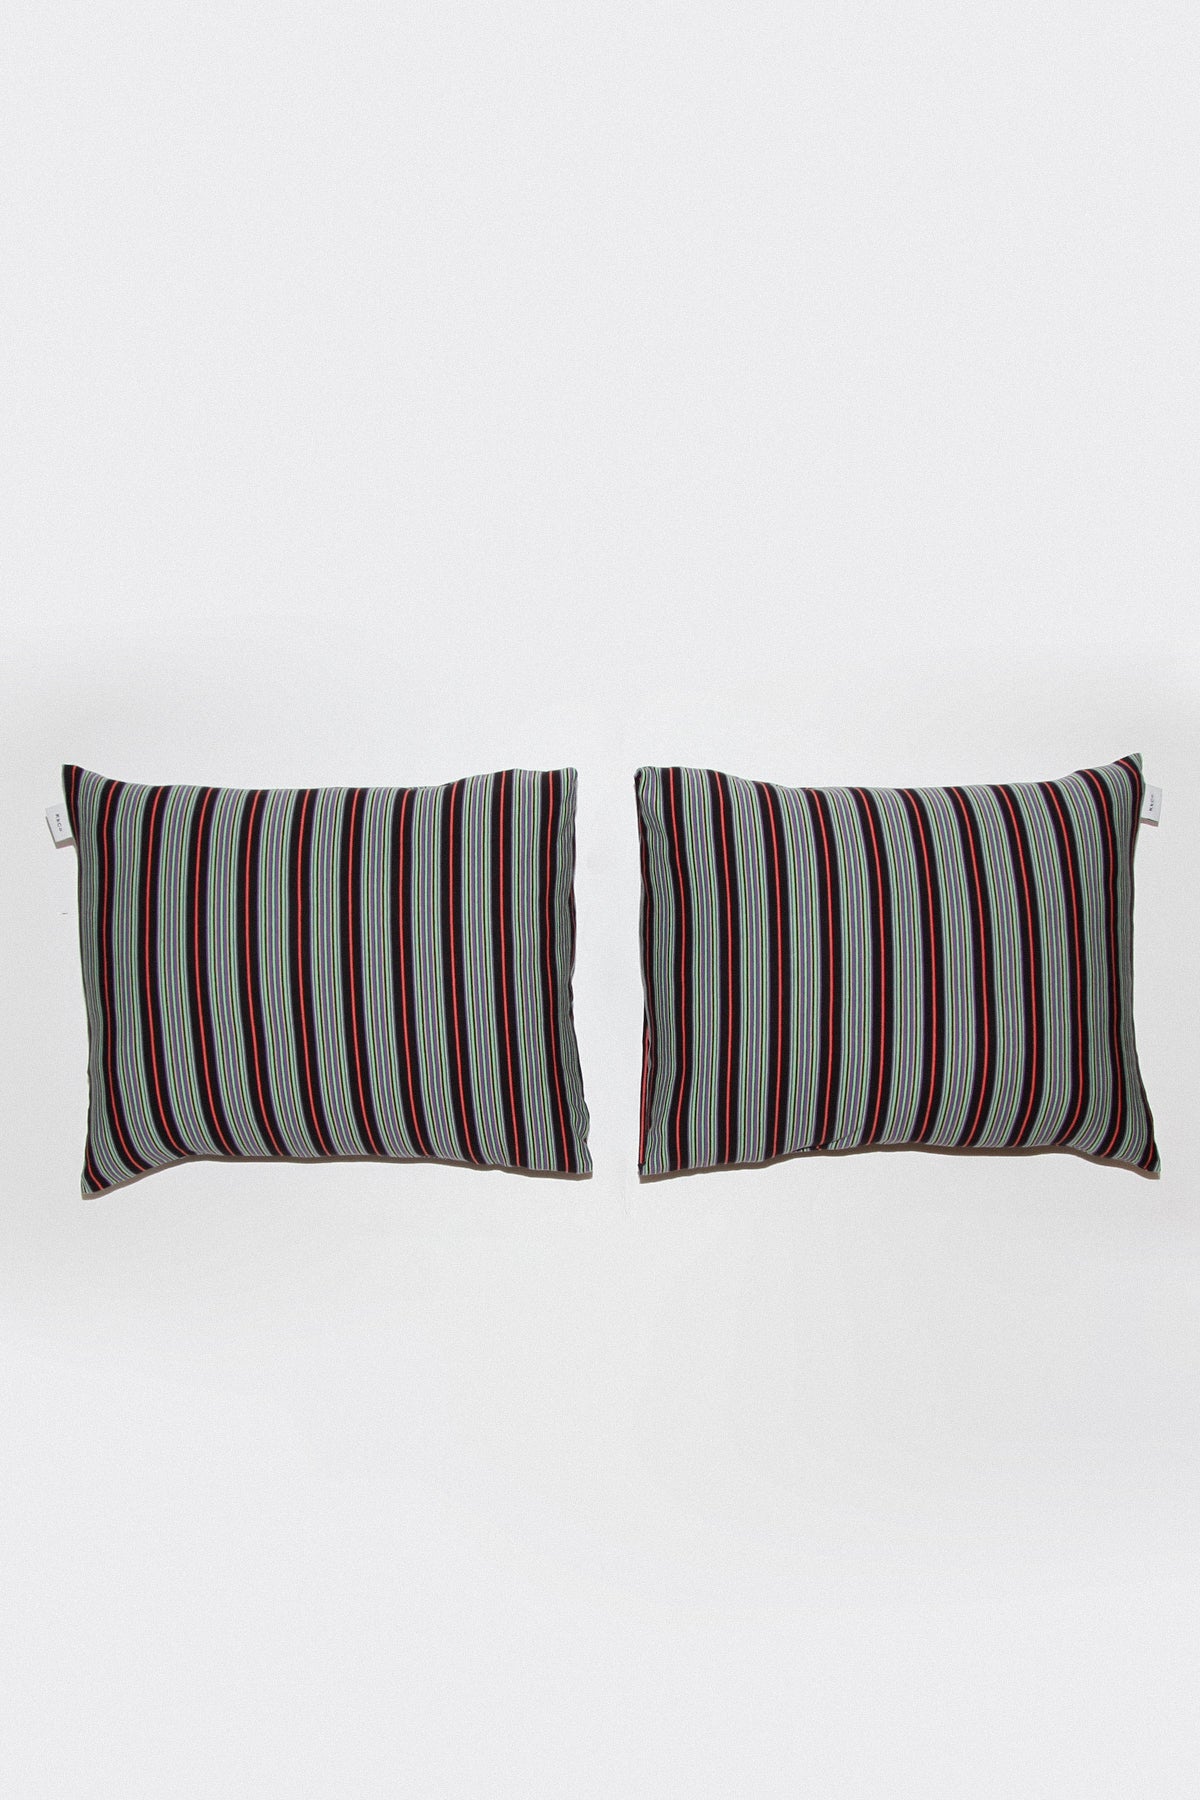 Pillow Sham Set in Striped Ink